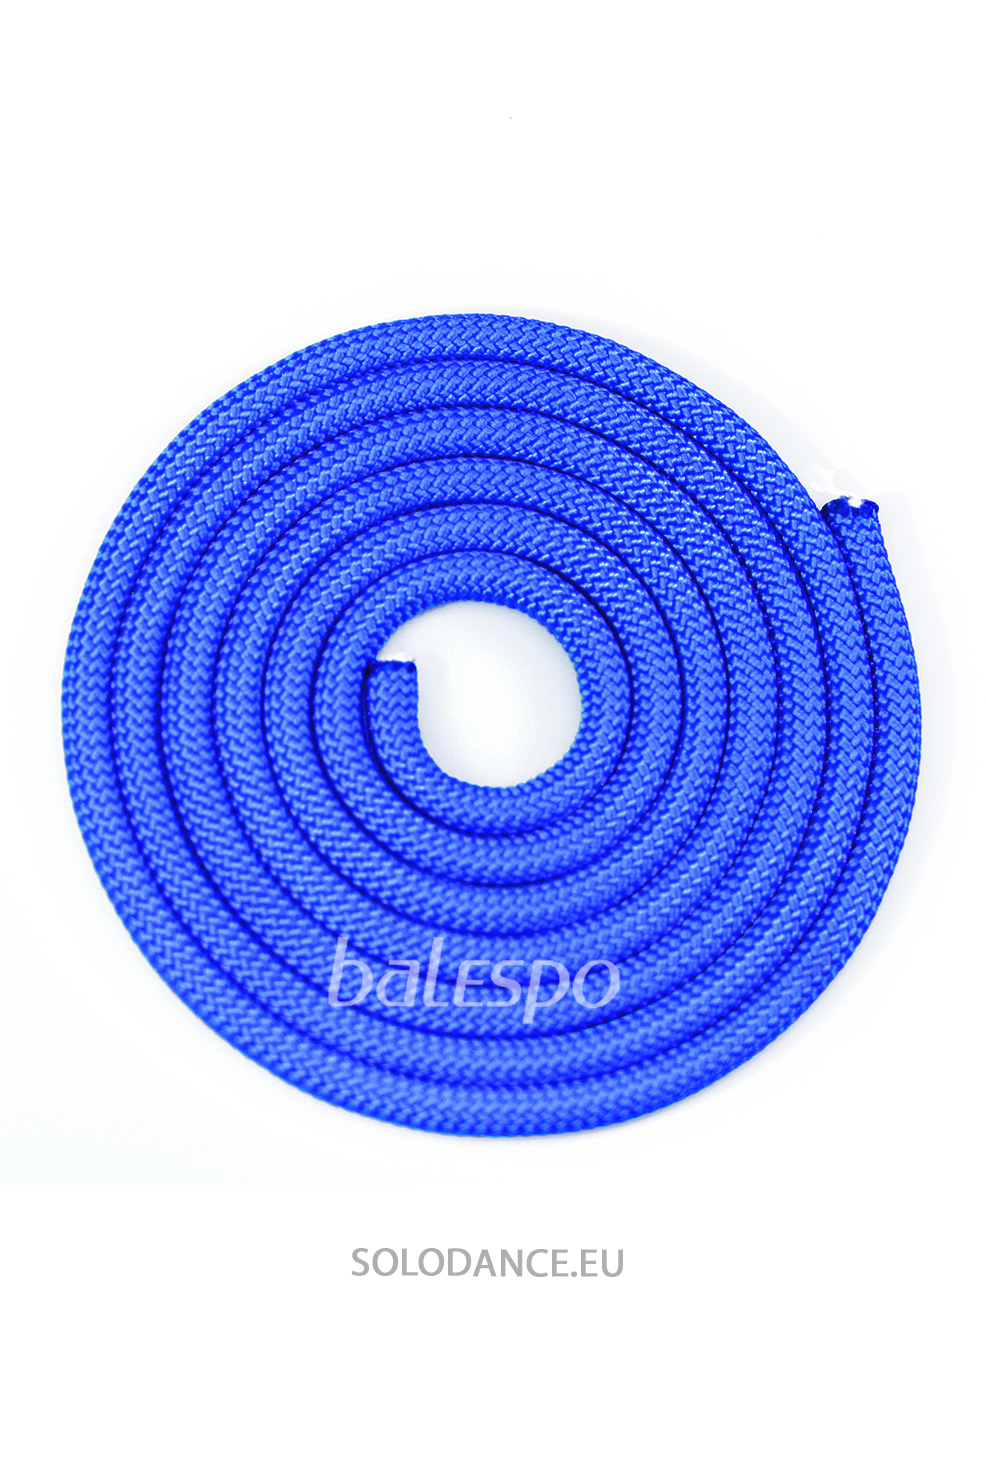 Gymnastic rope BALESPO fuchsia 2,5 m